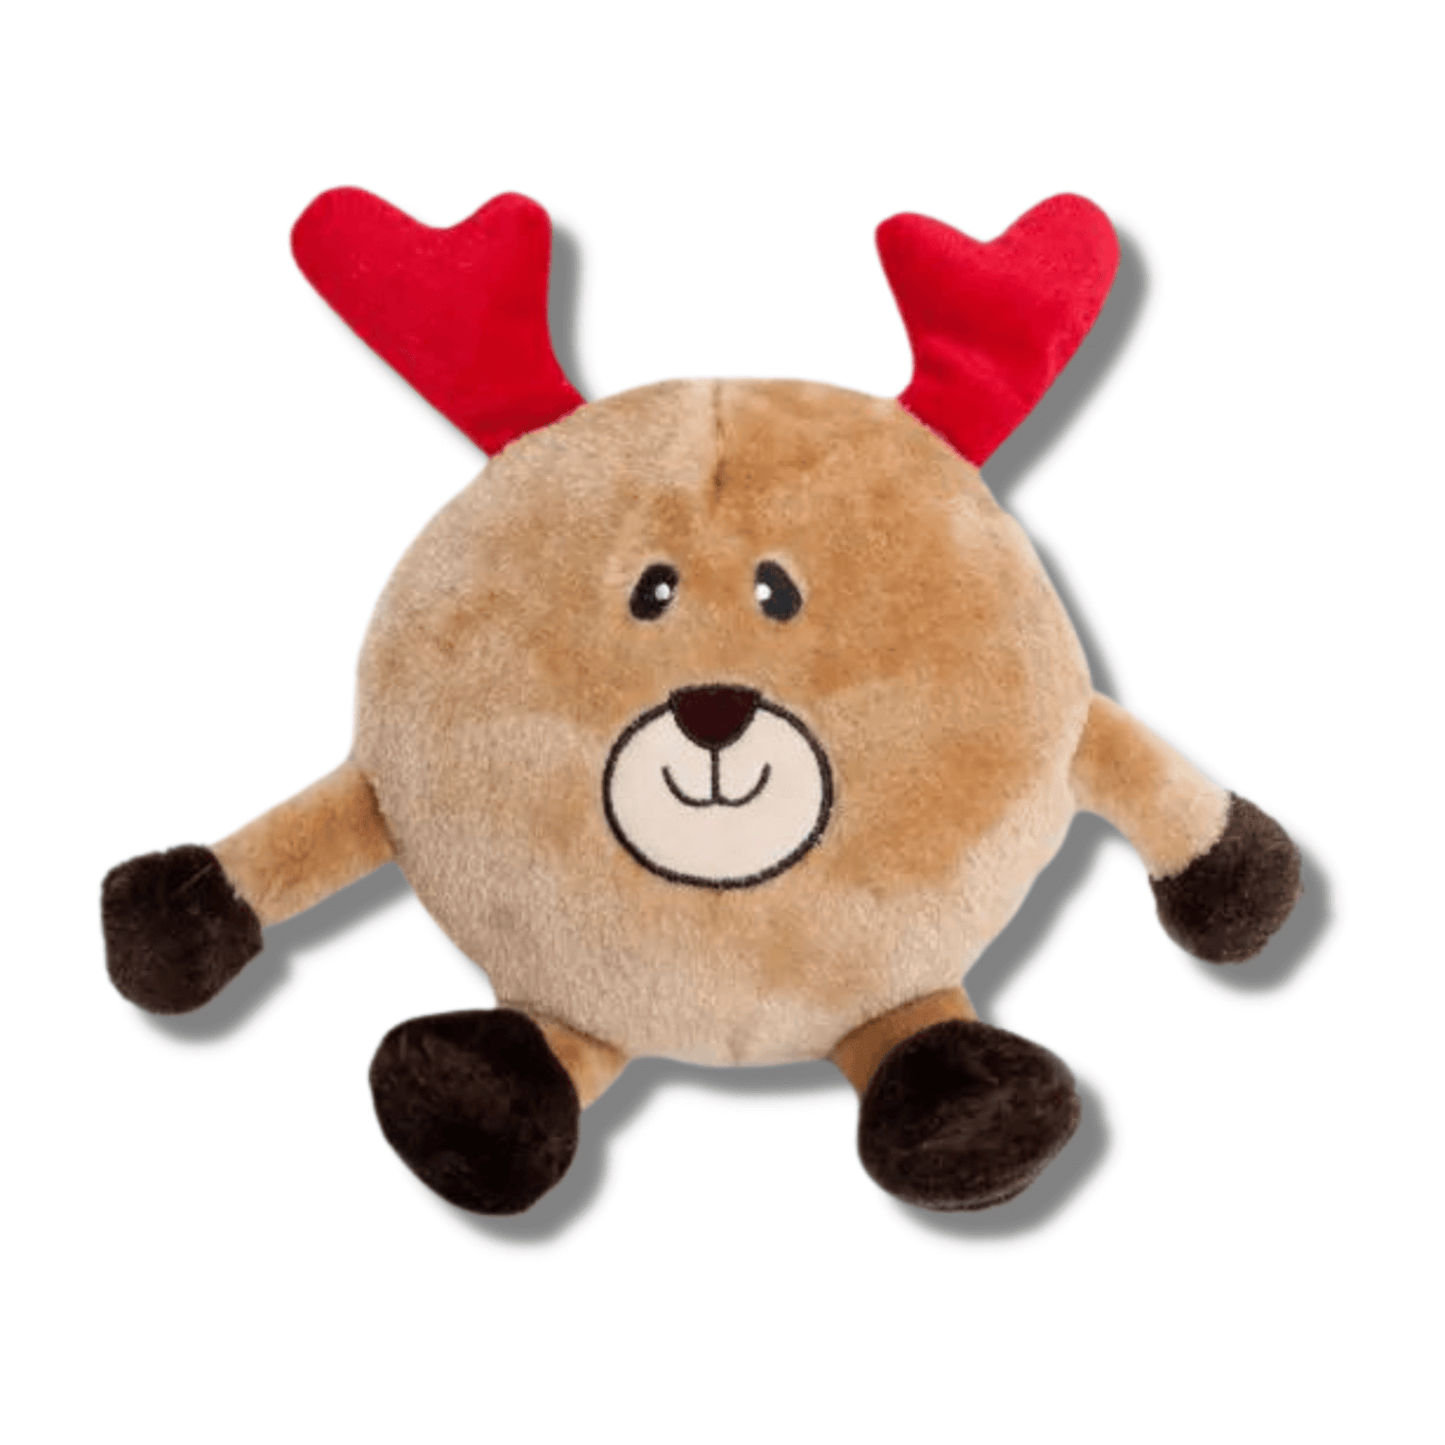 Christmas themed plush dog toy, let's pawty 